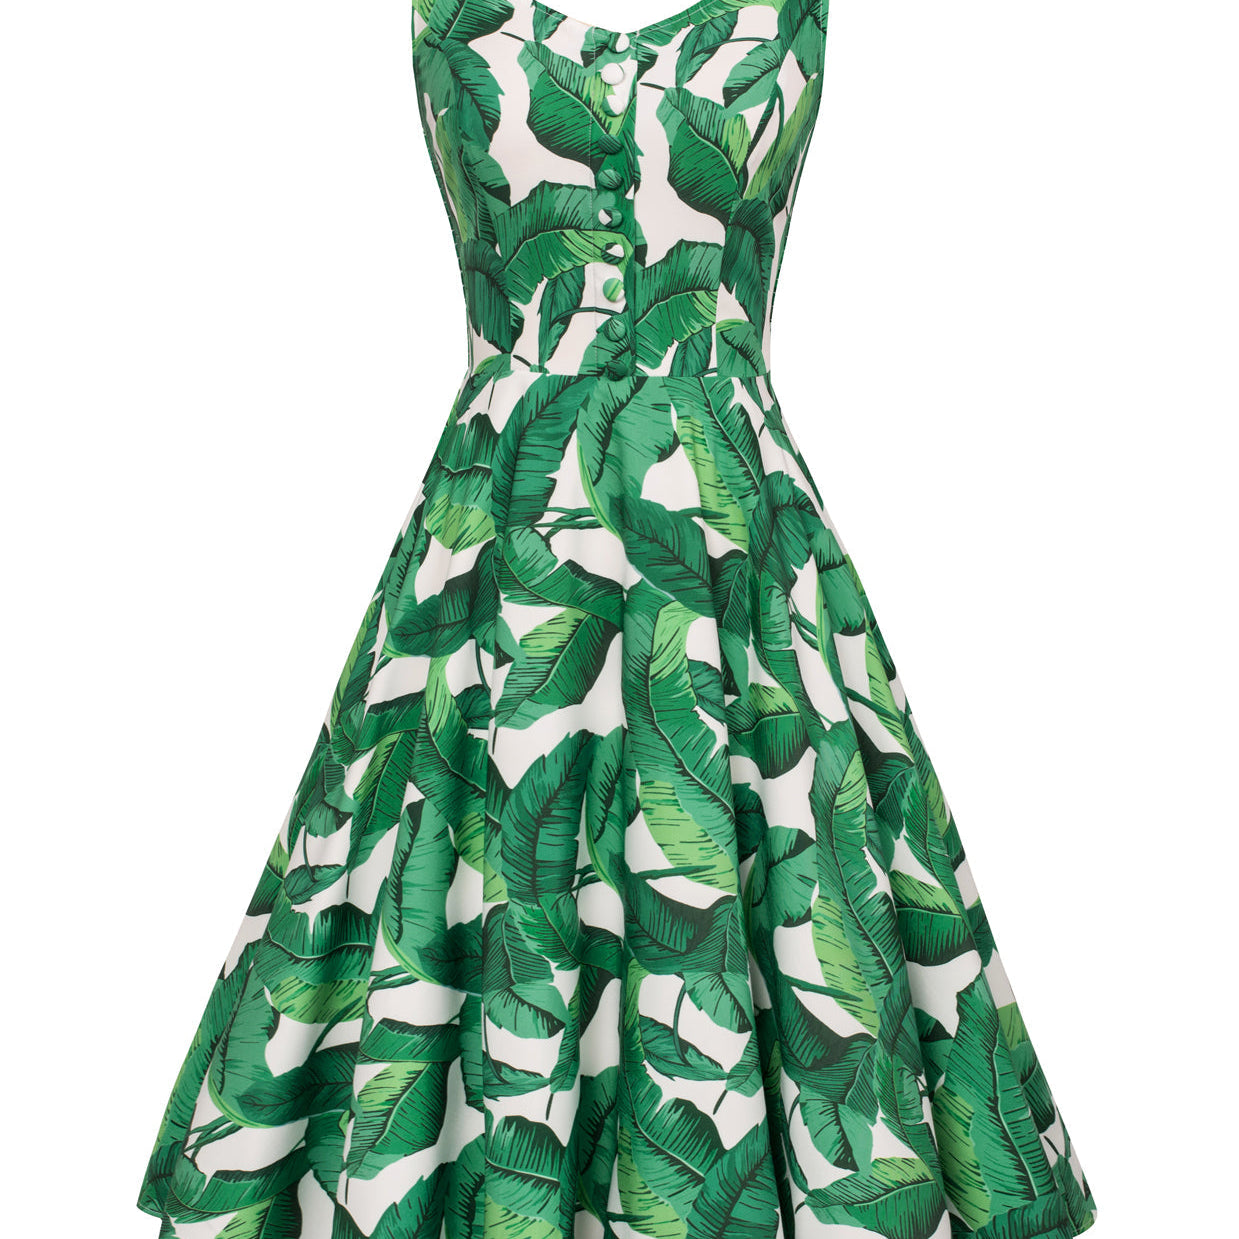 1950s Vintage Leaf Patterns Sleeveless Cocktail Party A-Line Dress